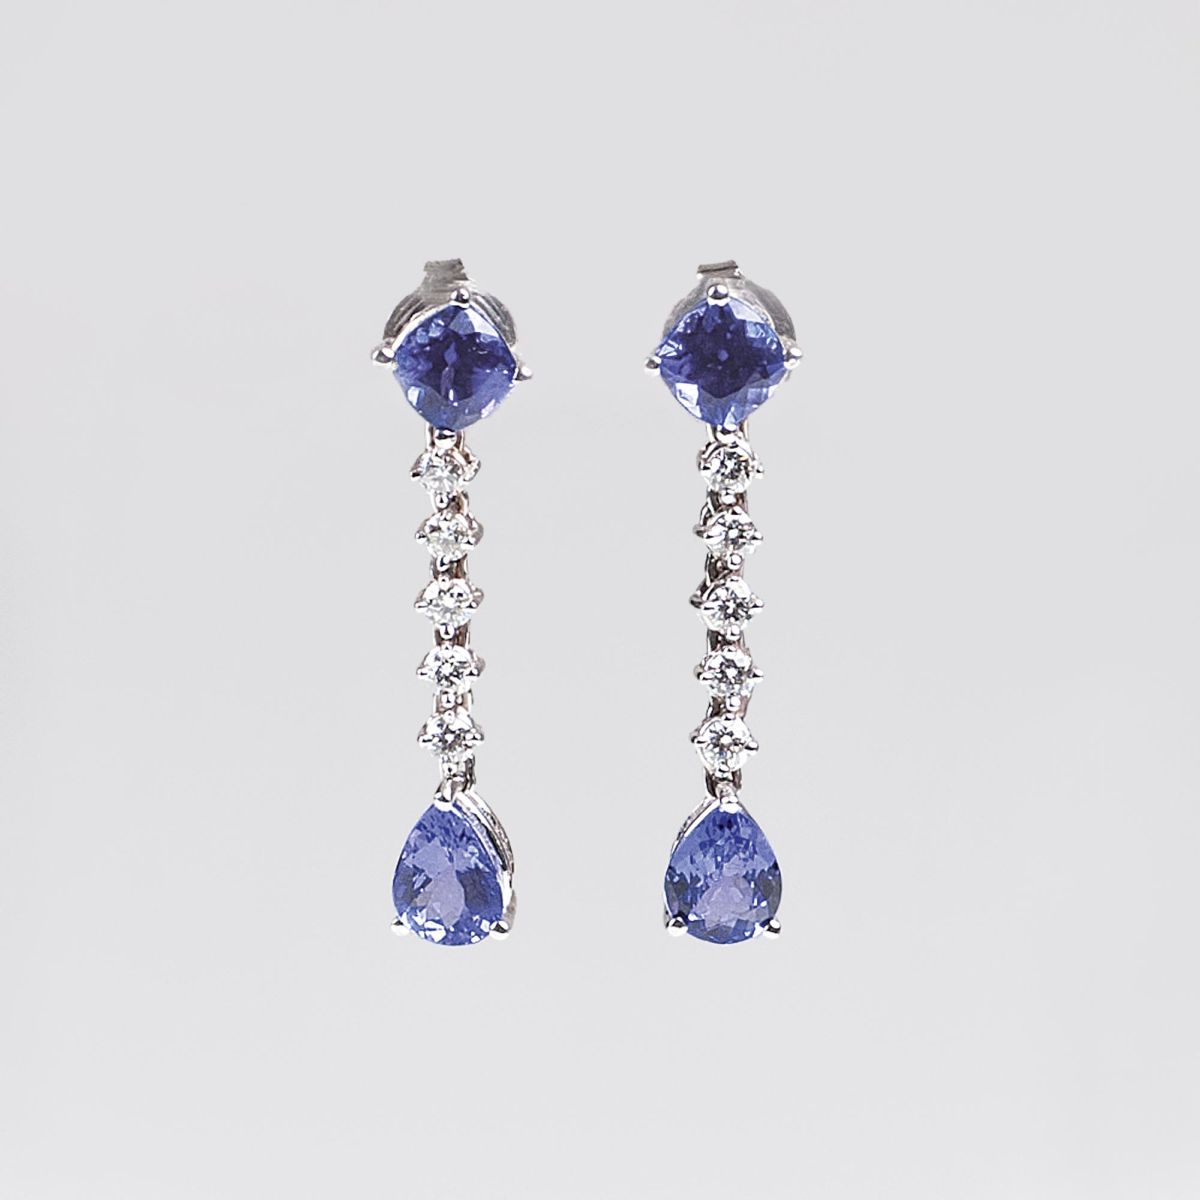 A Pair of Tanzanite Diamond Earrings